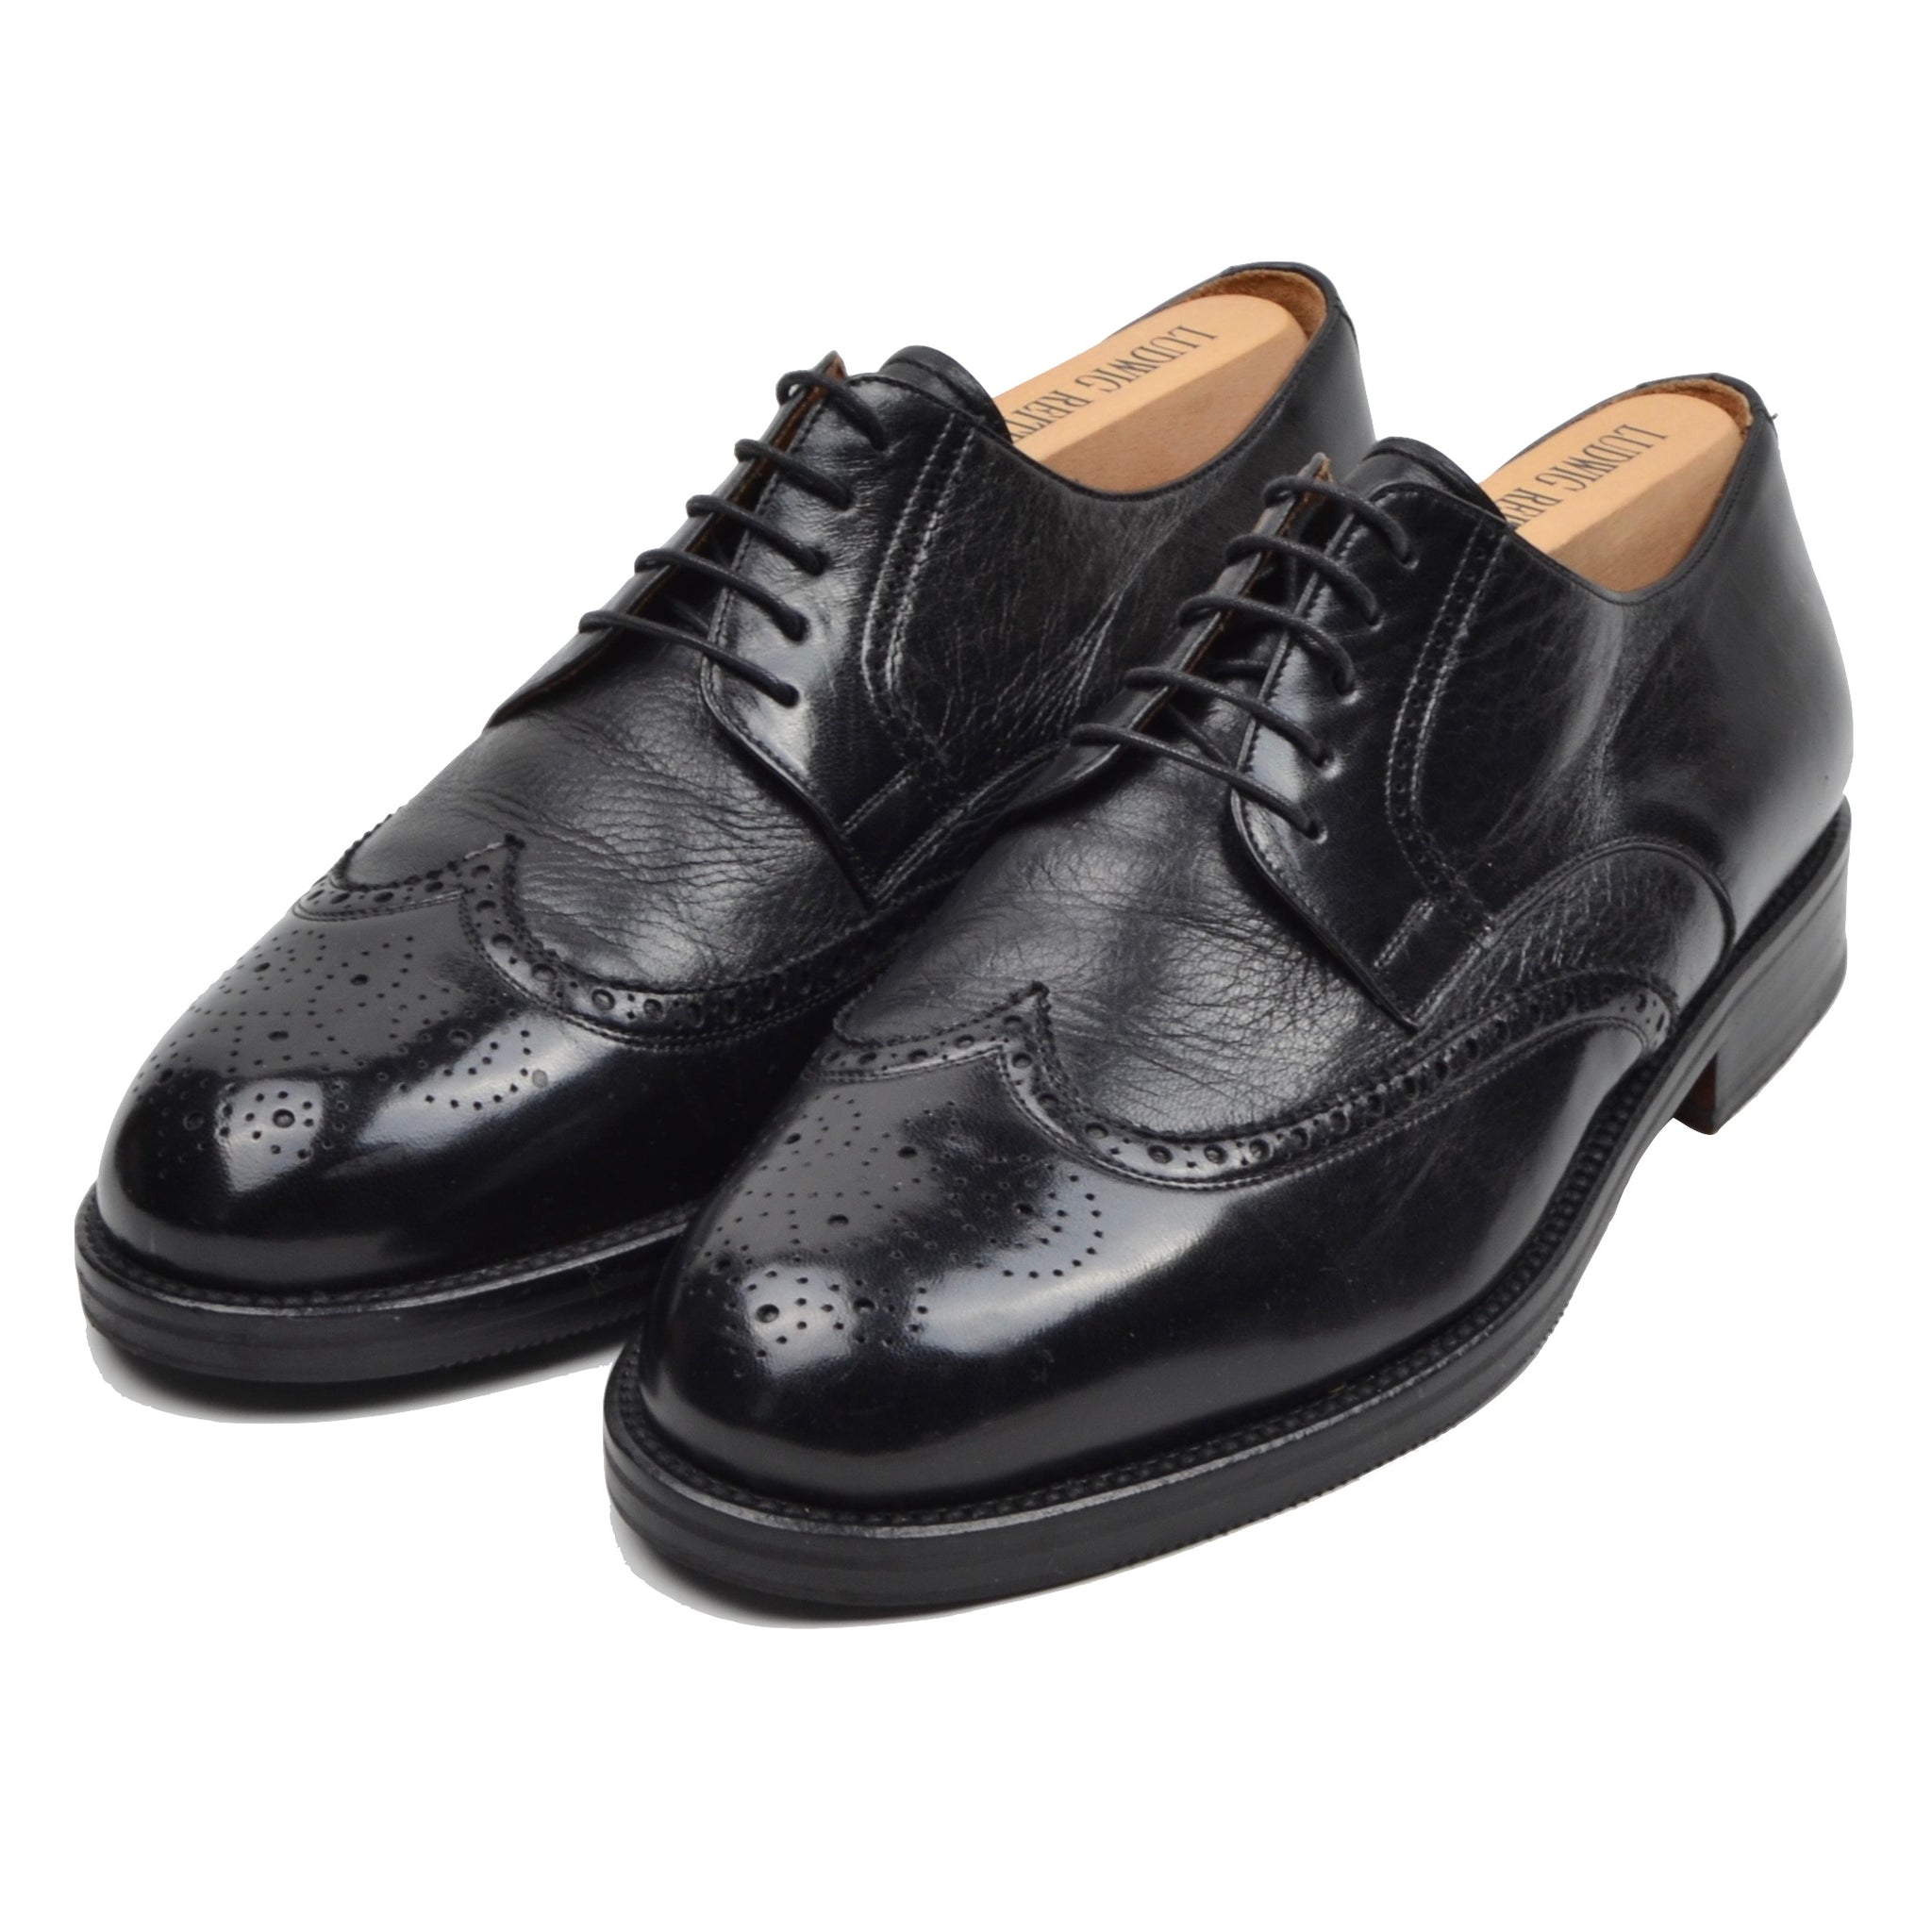 Magnanni Comfort Leather Shoes Size 43 